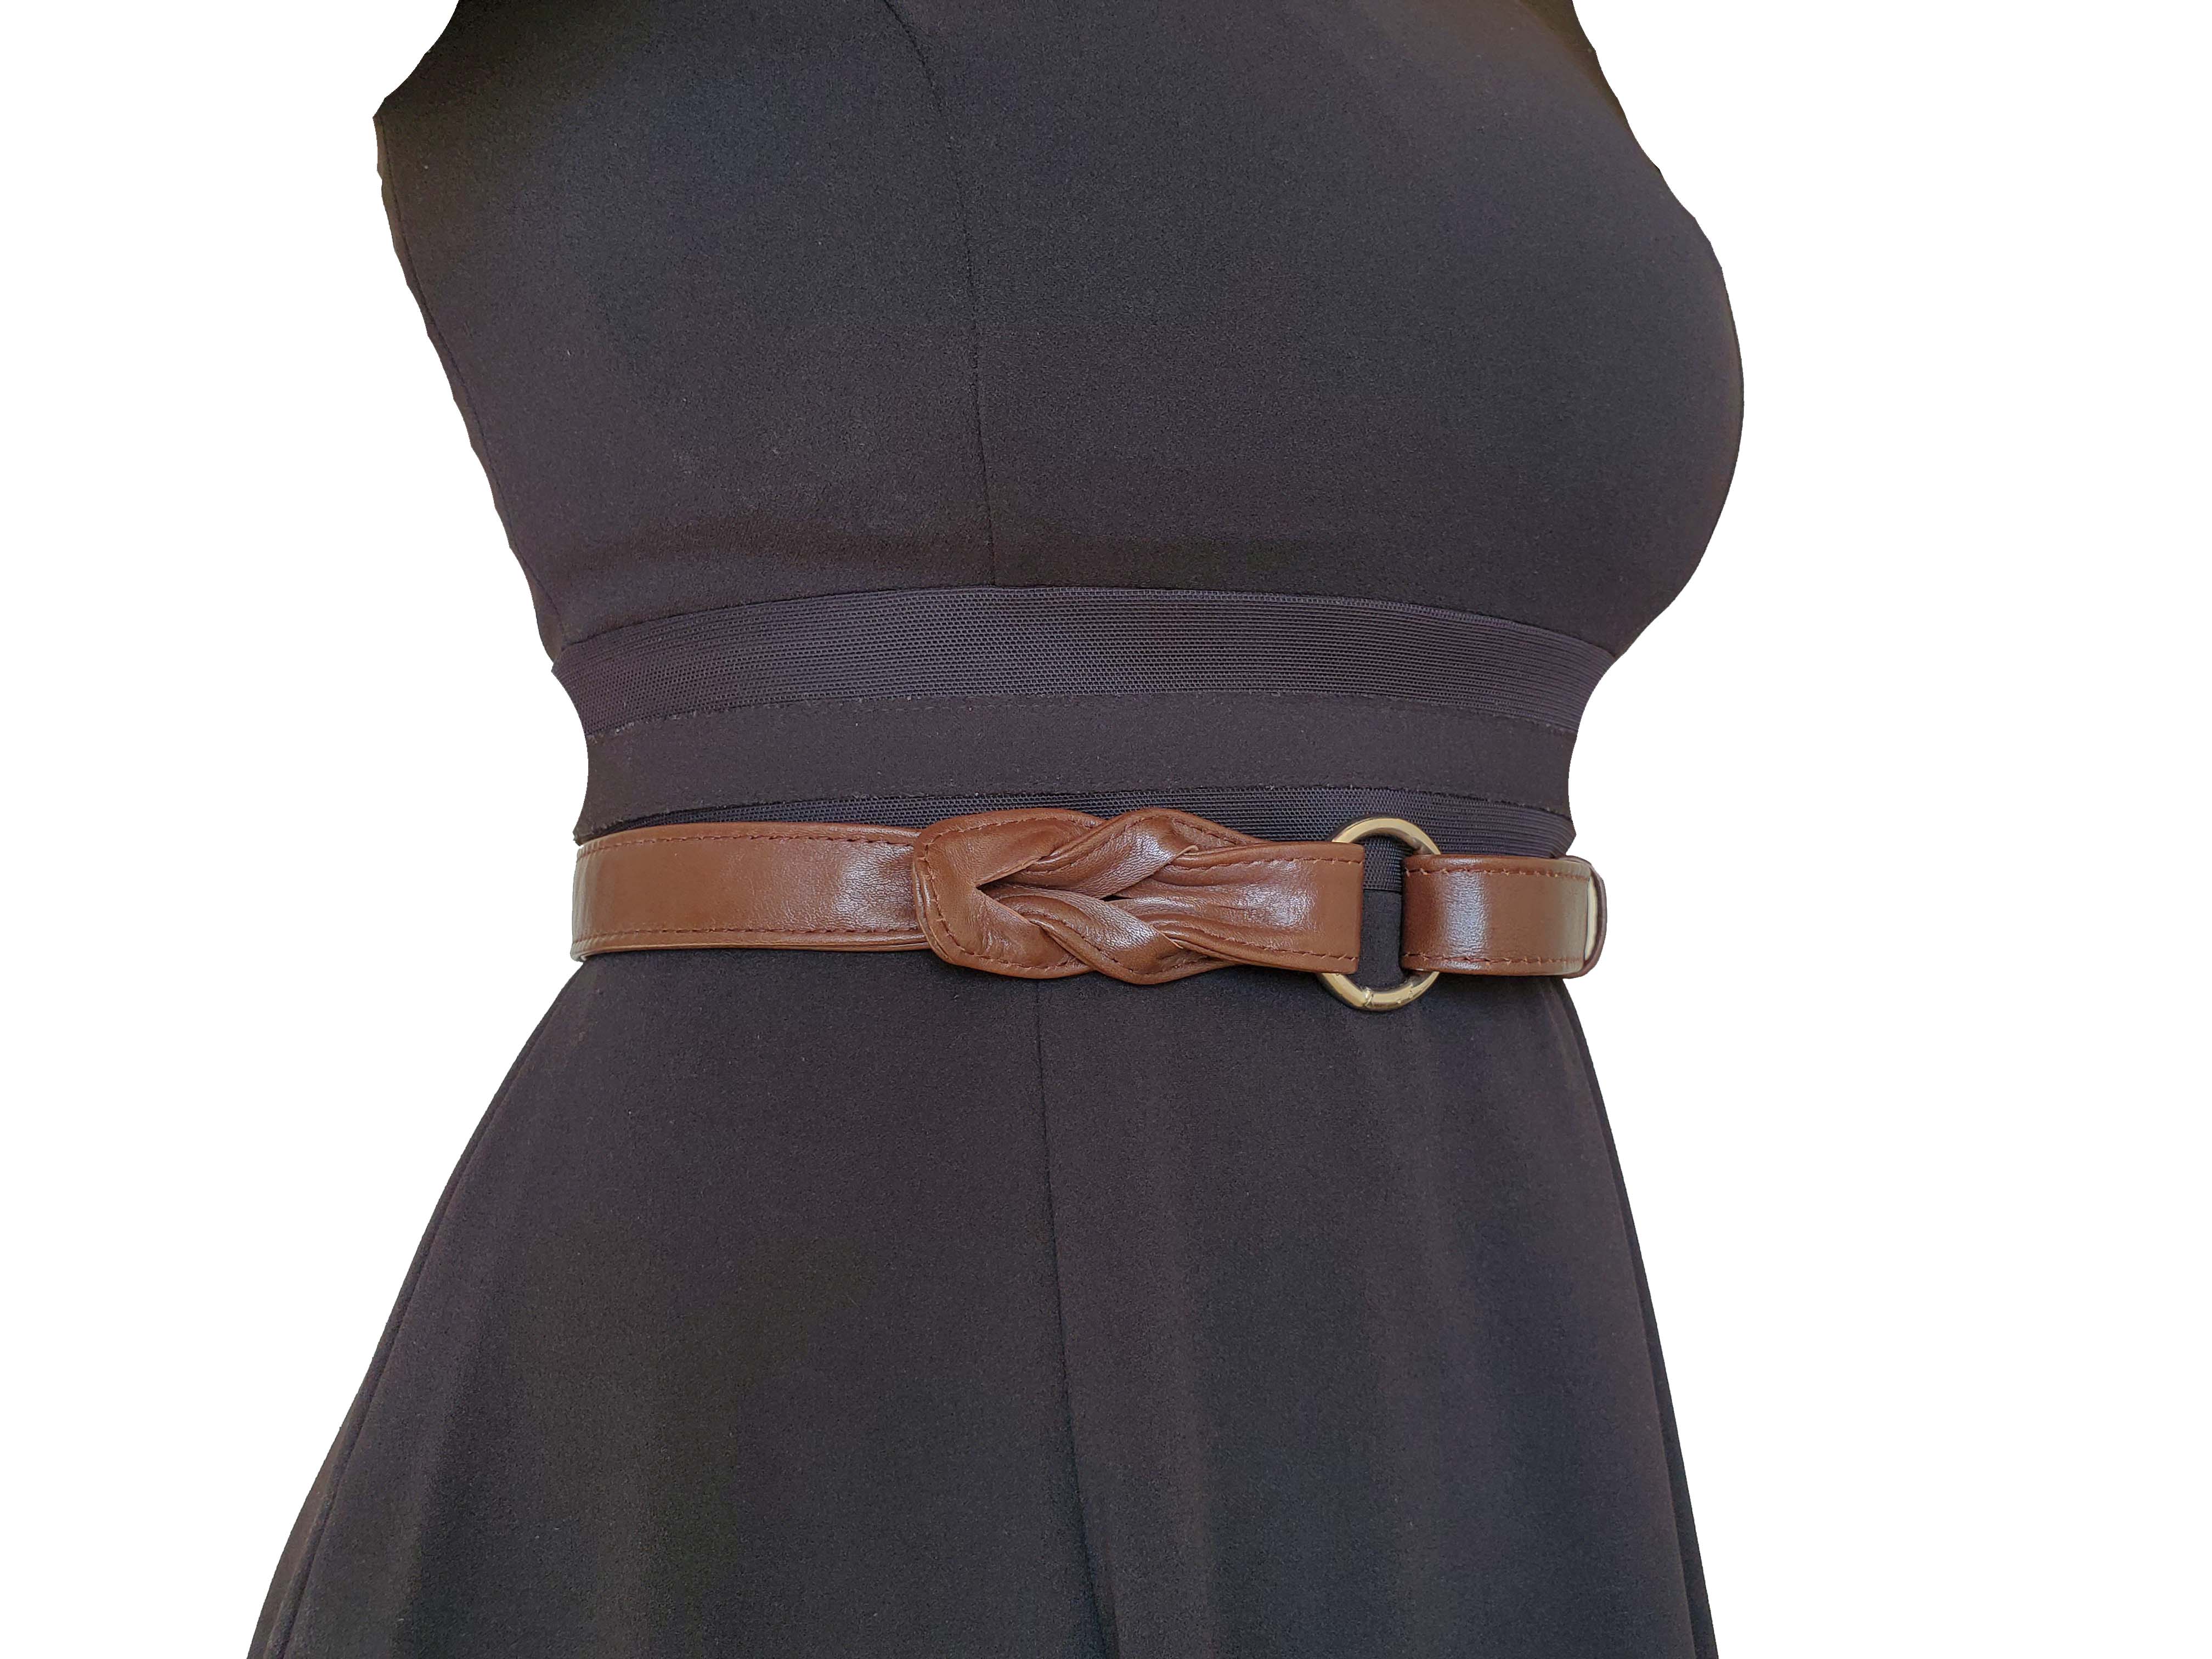 FIORETTO Dress Belts for Women, Wide Black Brown Elastic Belt, Fashion Cinch Belt, Leather Ladies Waist Belts